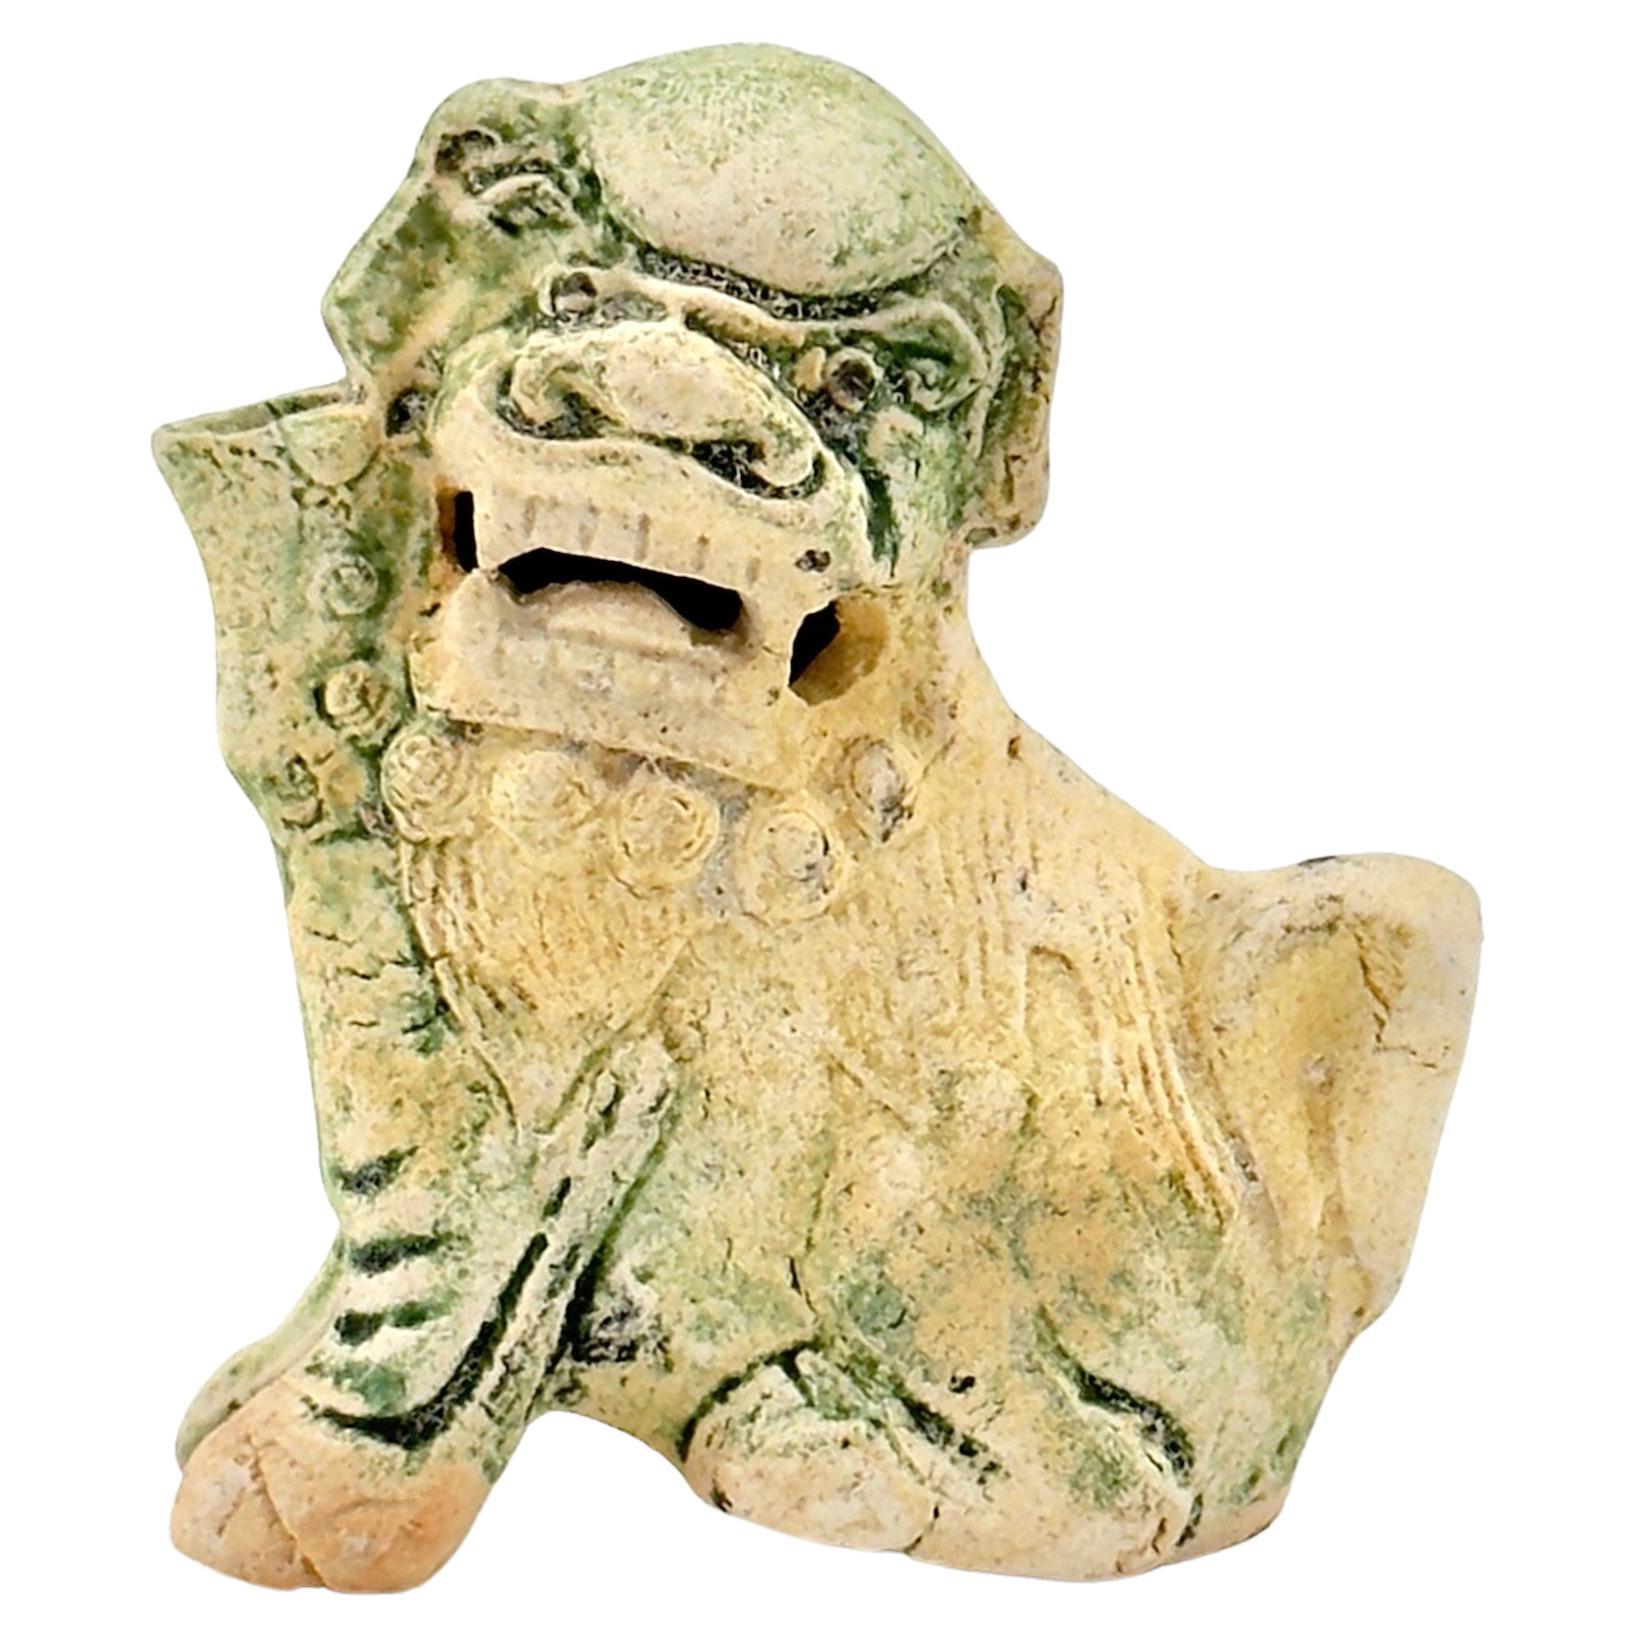 Chinese Pottery Haitai Figurine circa 1725, Qing Dynasty, Yongzheng Era